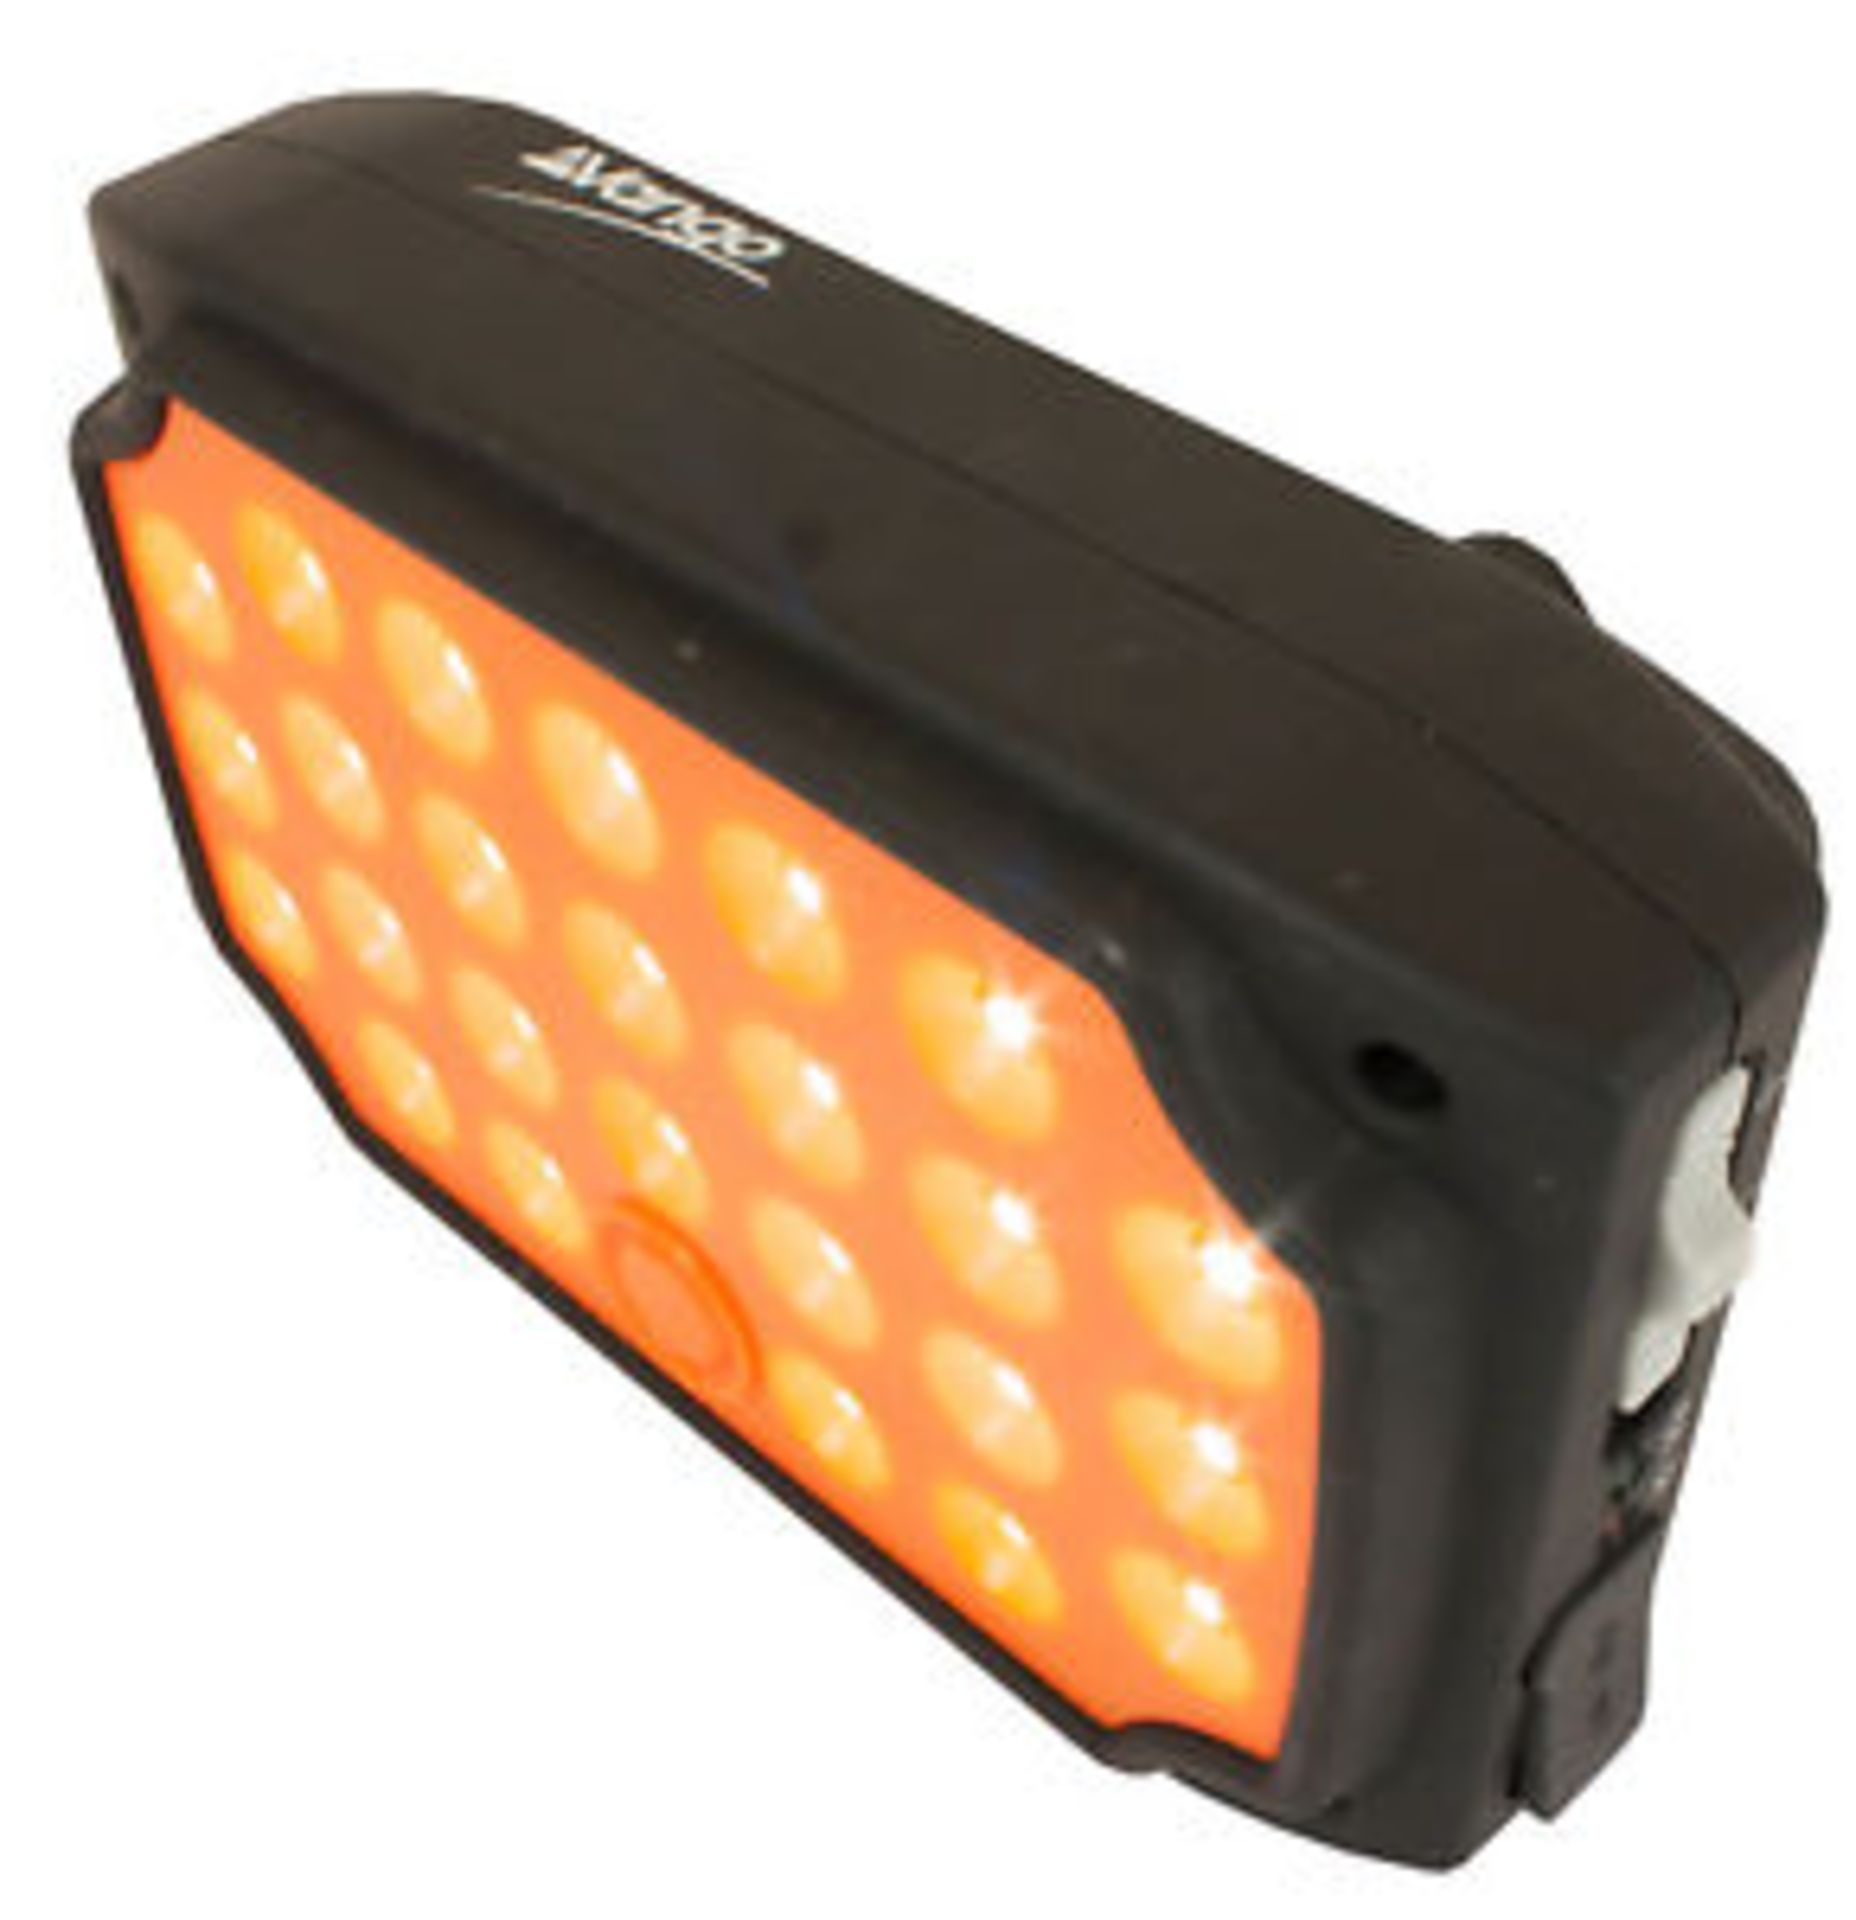 V Brand New Vango Light Pad Lantern - RRP £30.00 - DC Charger Plugs Into Cigarette Lighter -